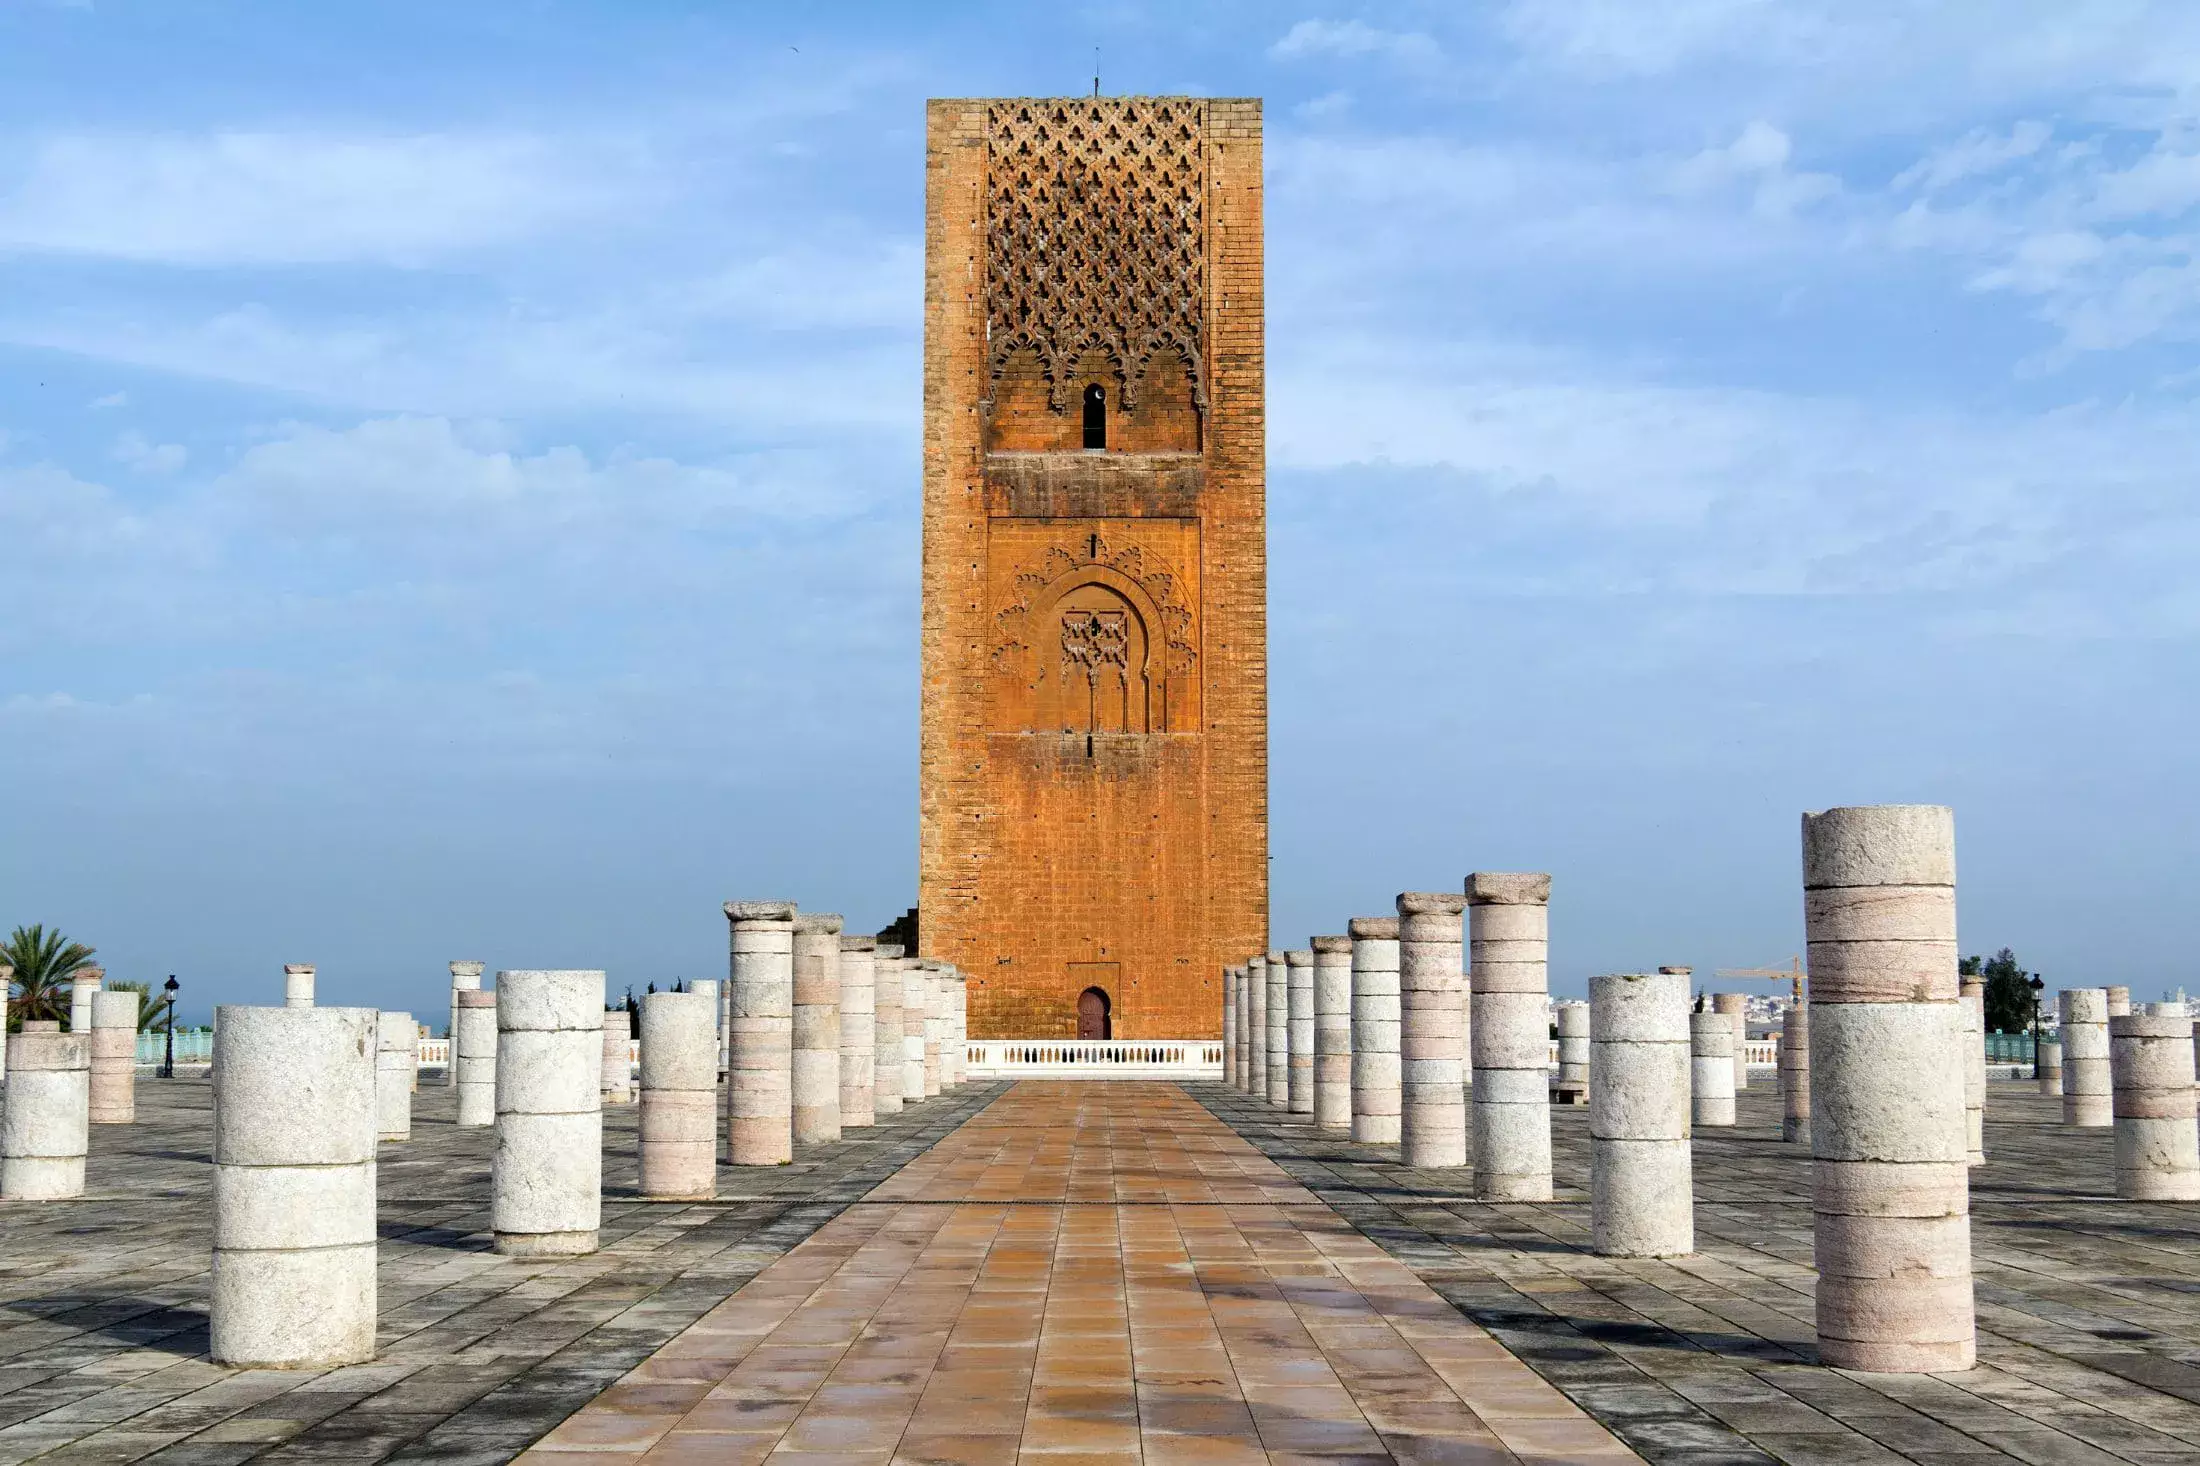 Hassan tower in Rabat, an iconic Moroccan landmark